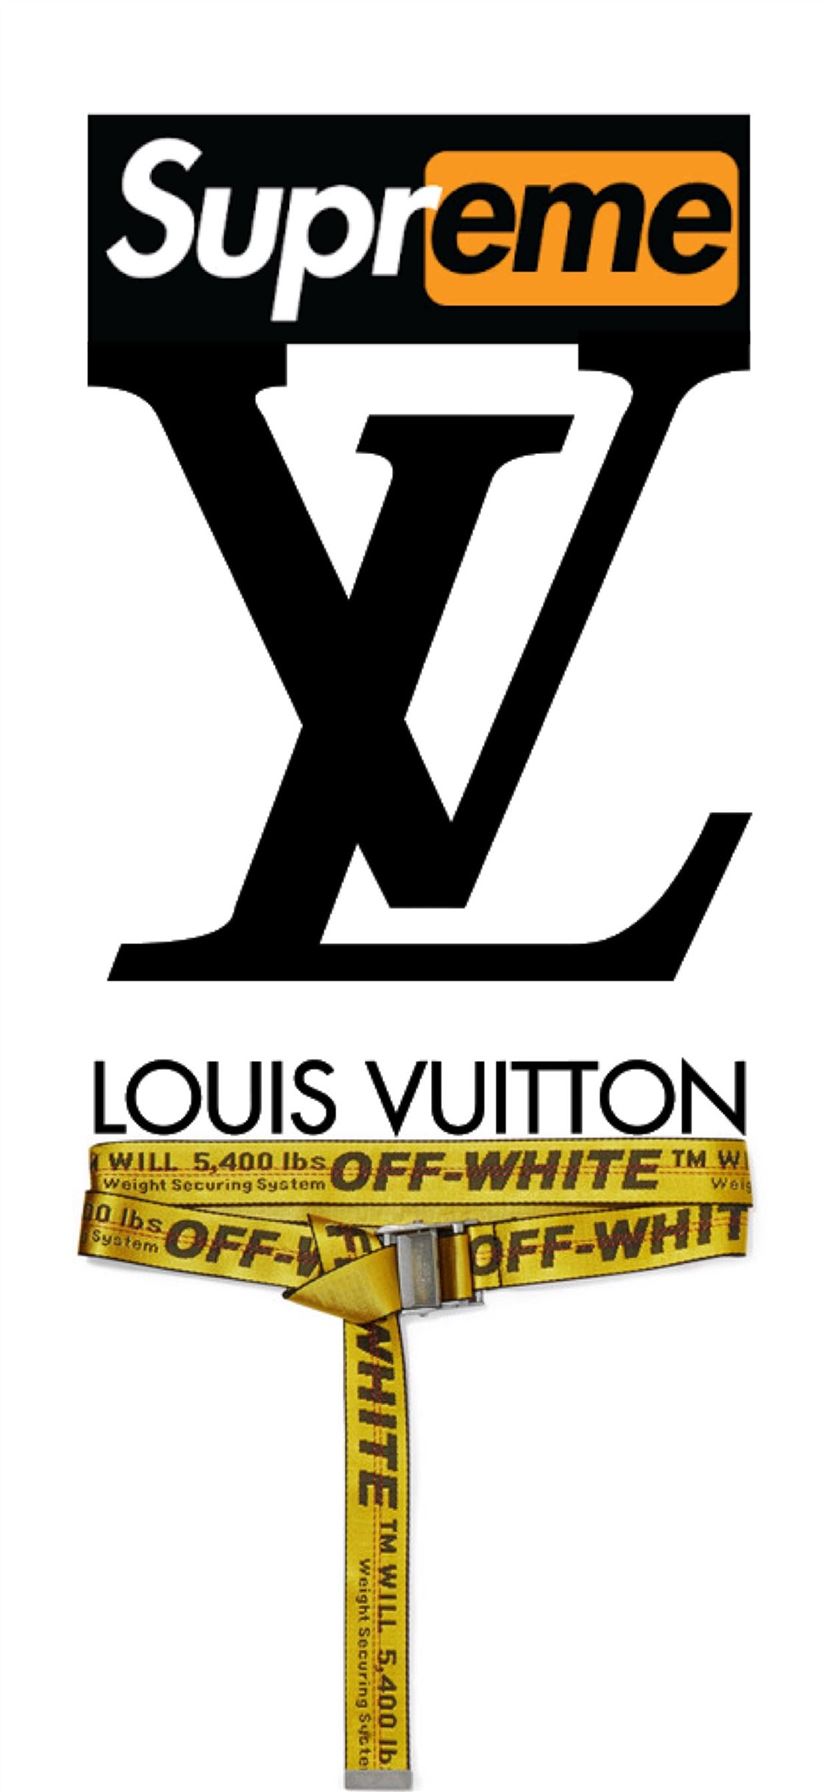 90 Louis Vuitton, Gucci Supreme phone wallpaper ideas  hypebeast wallpaper,  phone wallpaper, iphone wallpaper